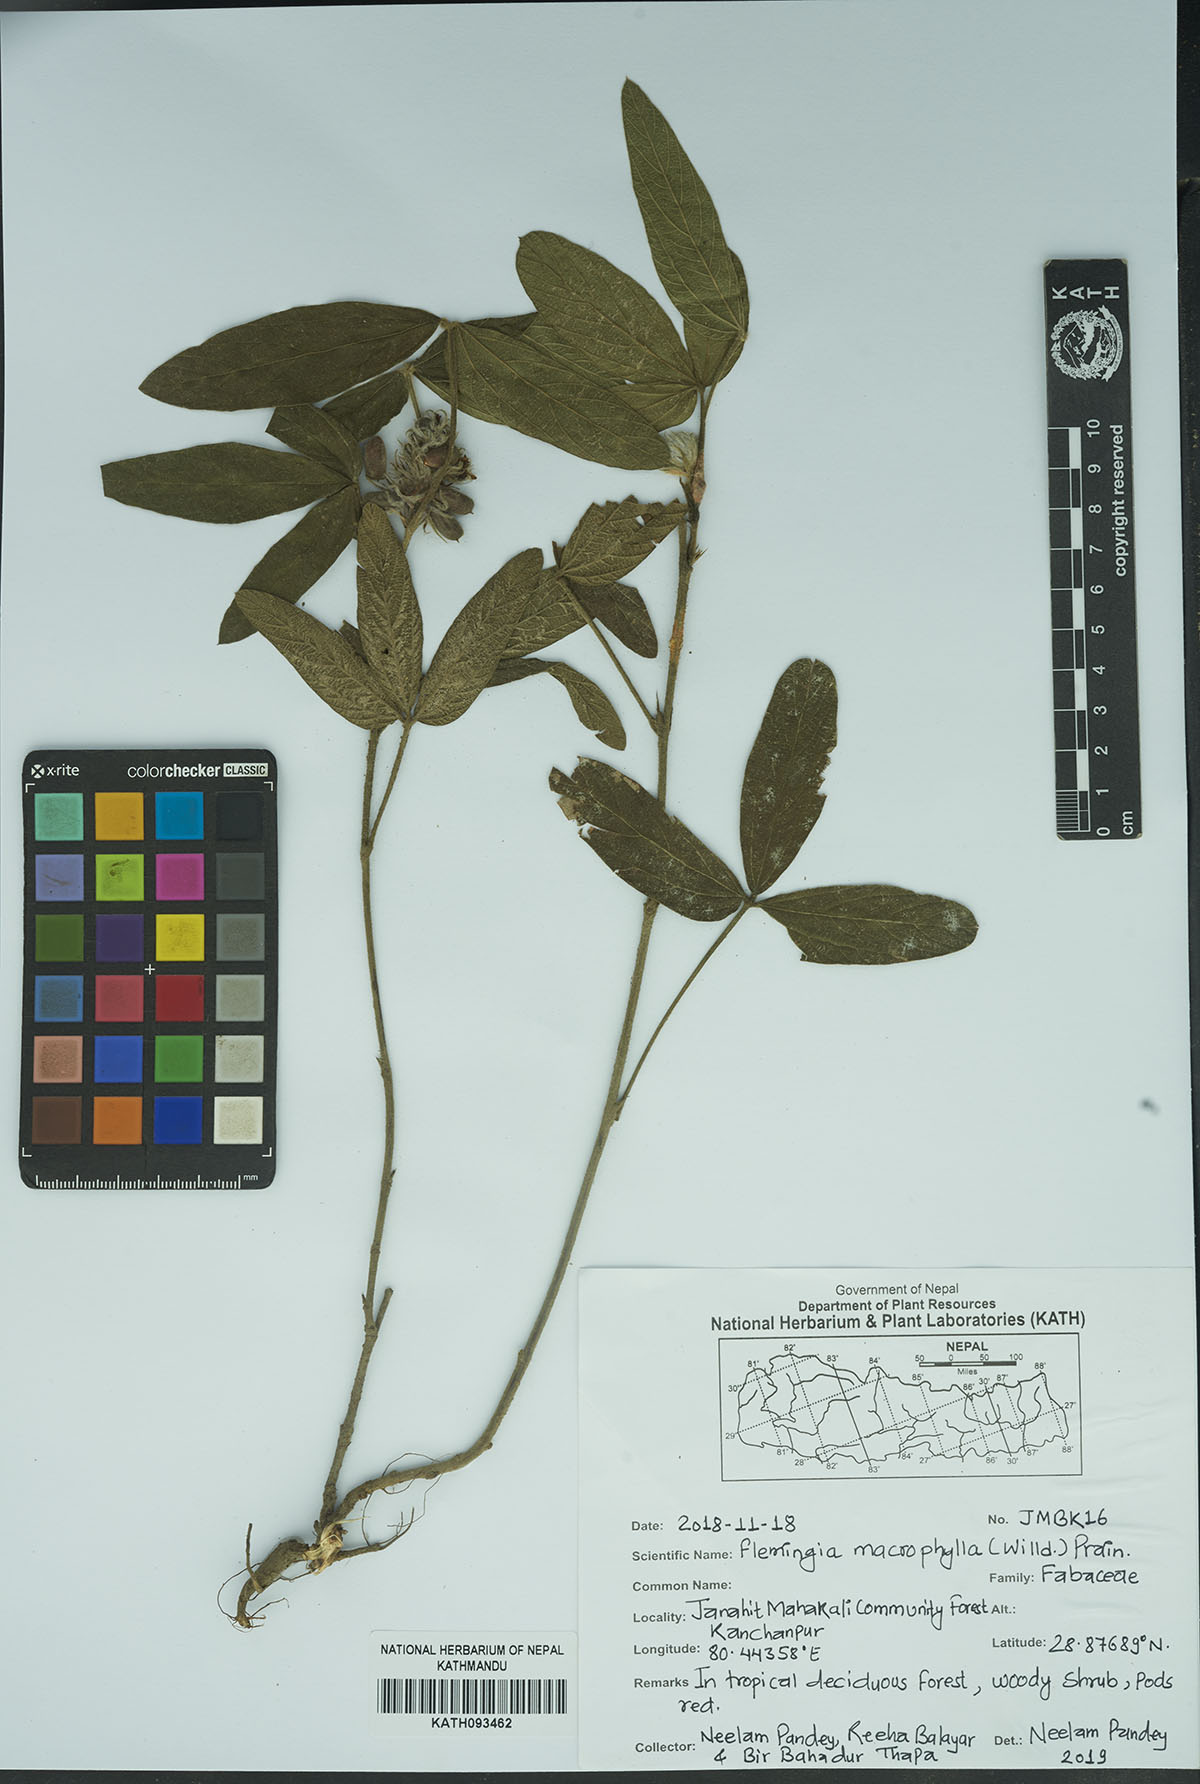 Flemingia macrophylla (Willd.) Prain.